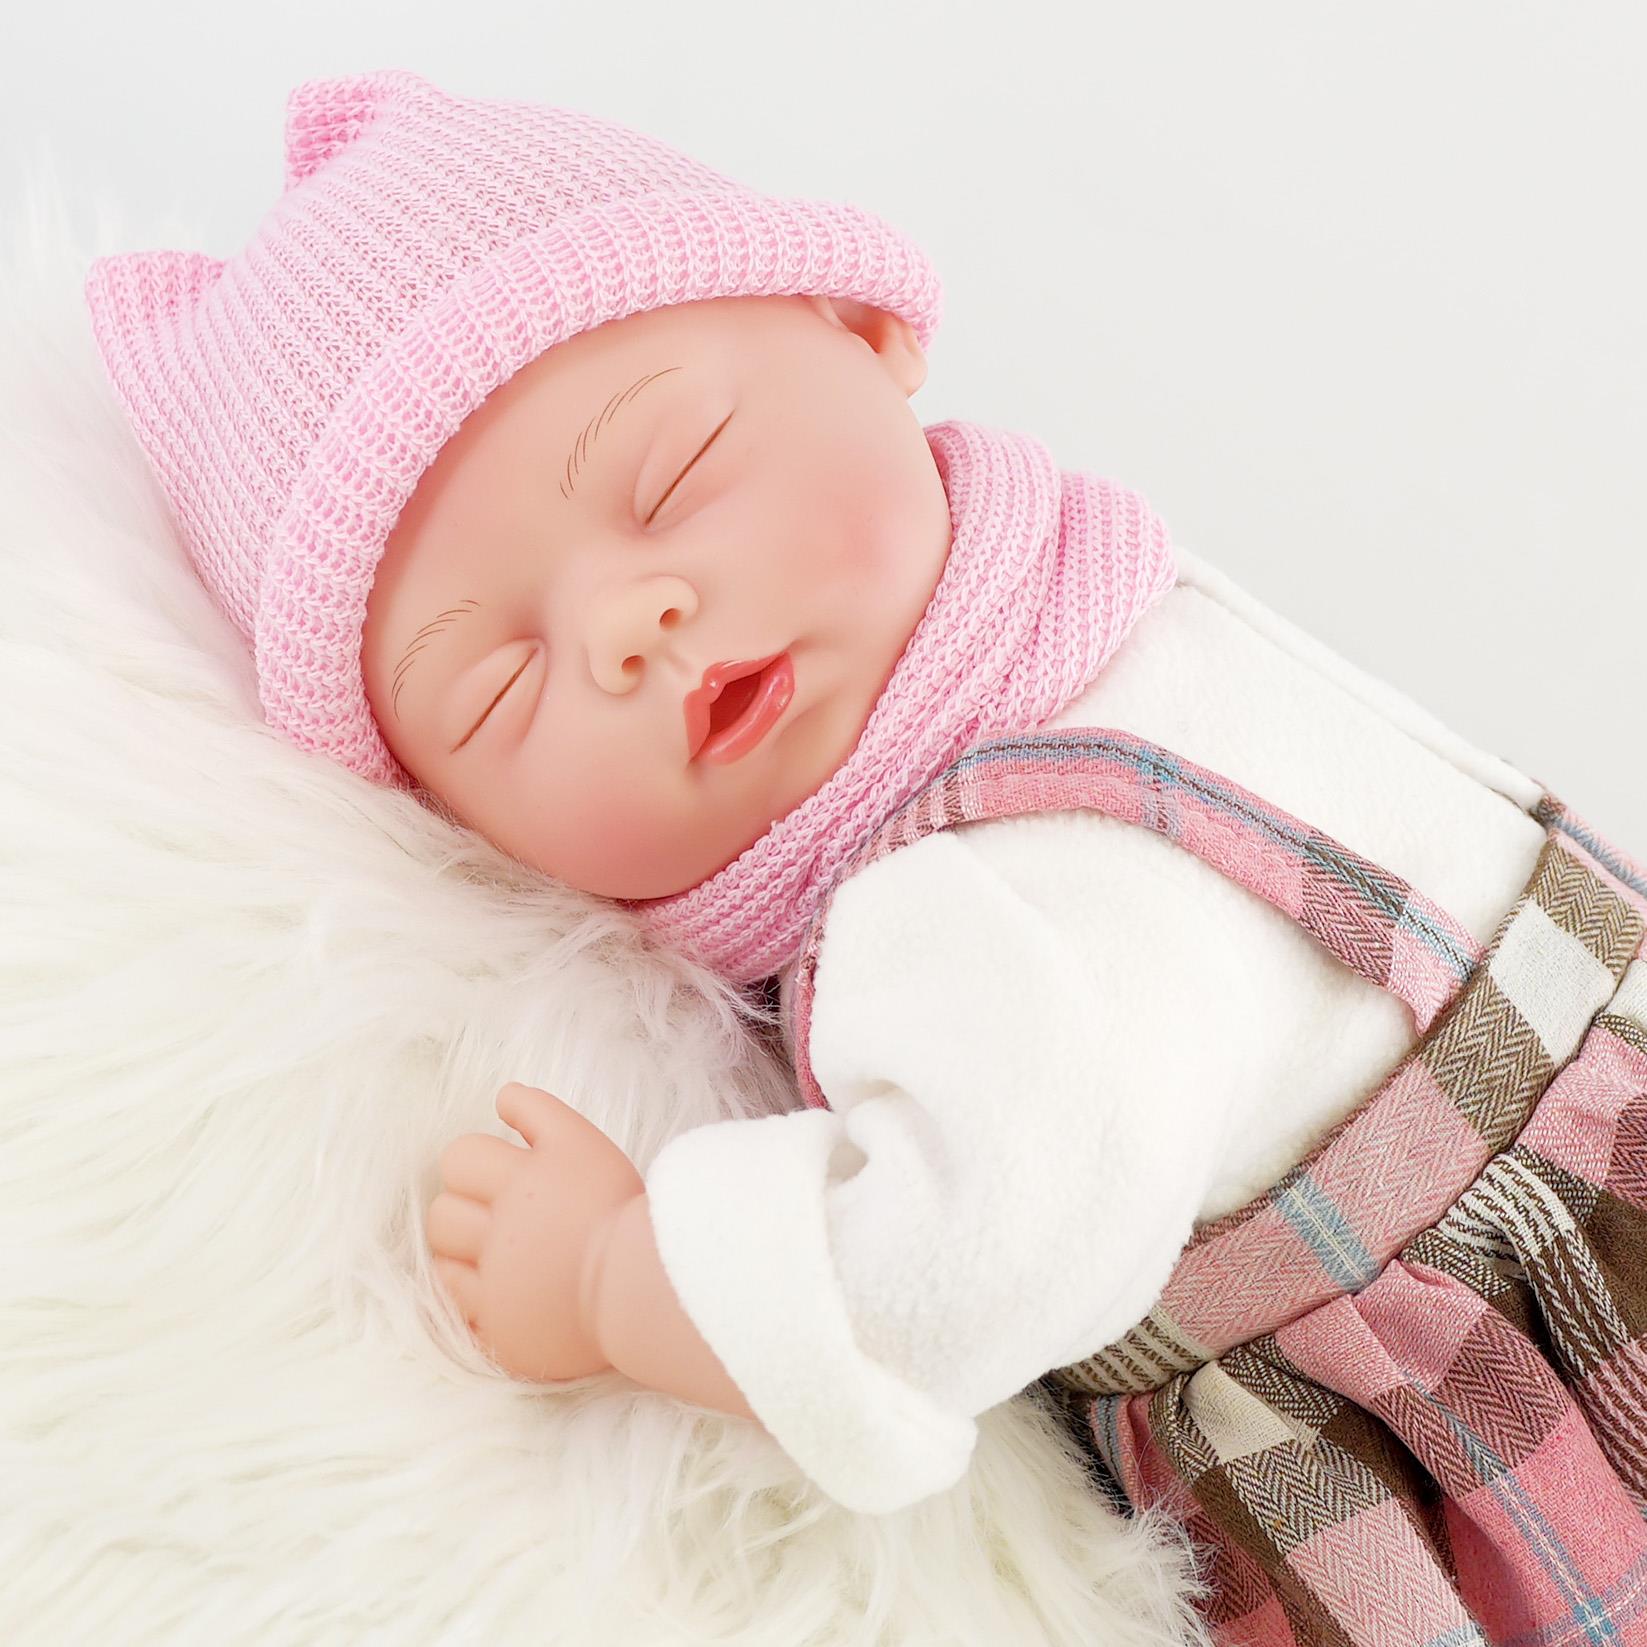 BiBi Doll Reborn Sleeping Boy Periwinkle (50 cm / 20) by BiBi DollNone –  BiBi Dolls